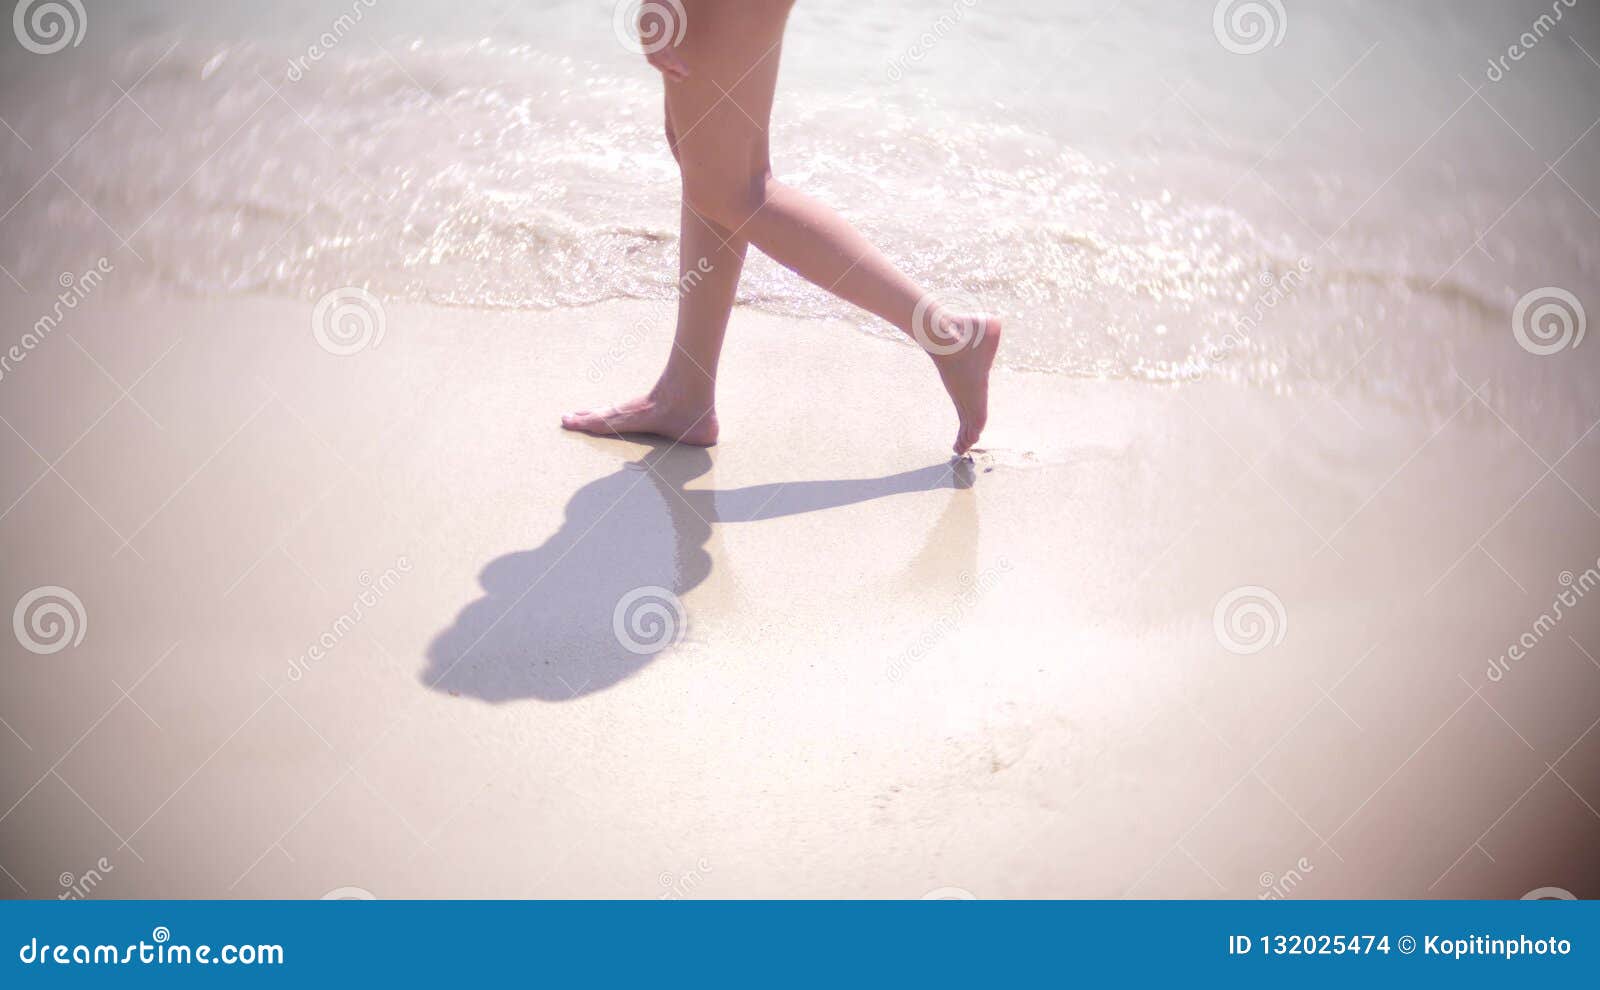 running barefoot on sand